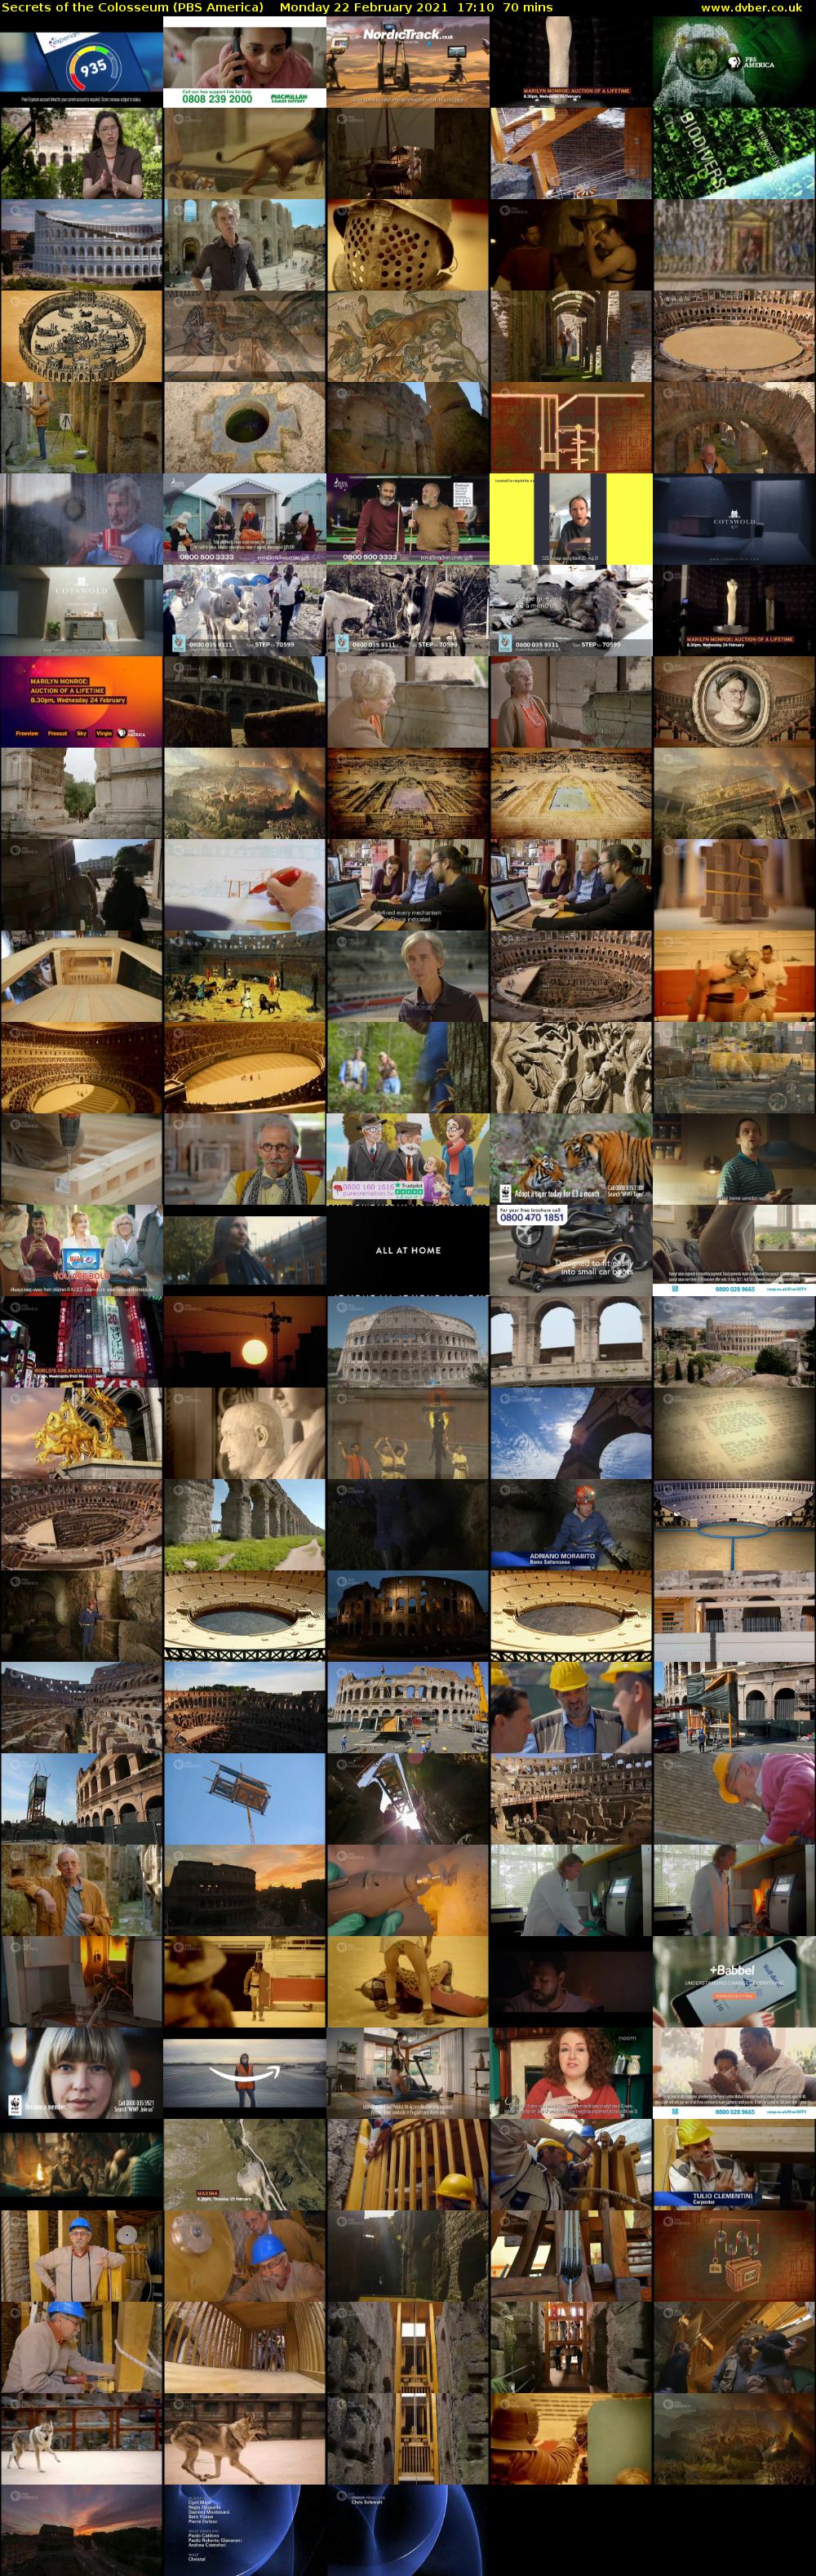 Secrets of the Colosseum (PBS America) Monday 22 February 2021 17:10 - 18:20